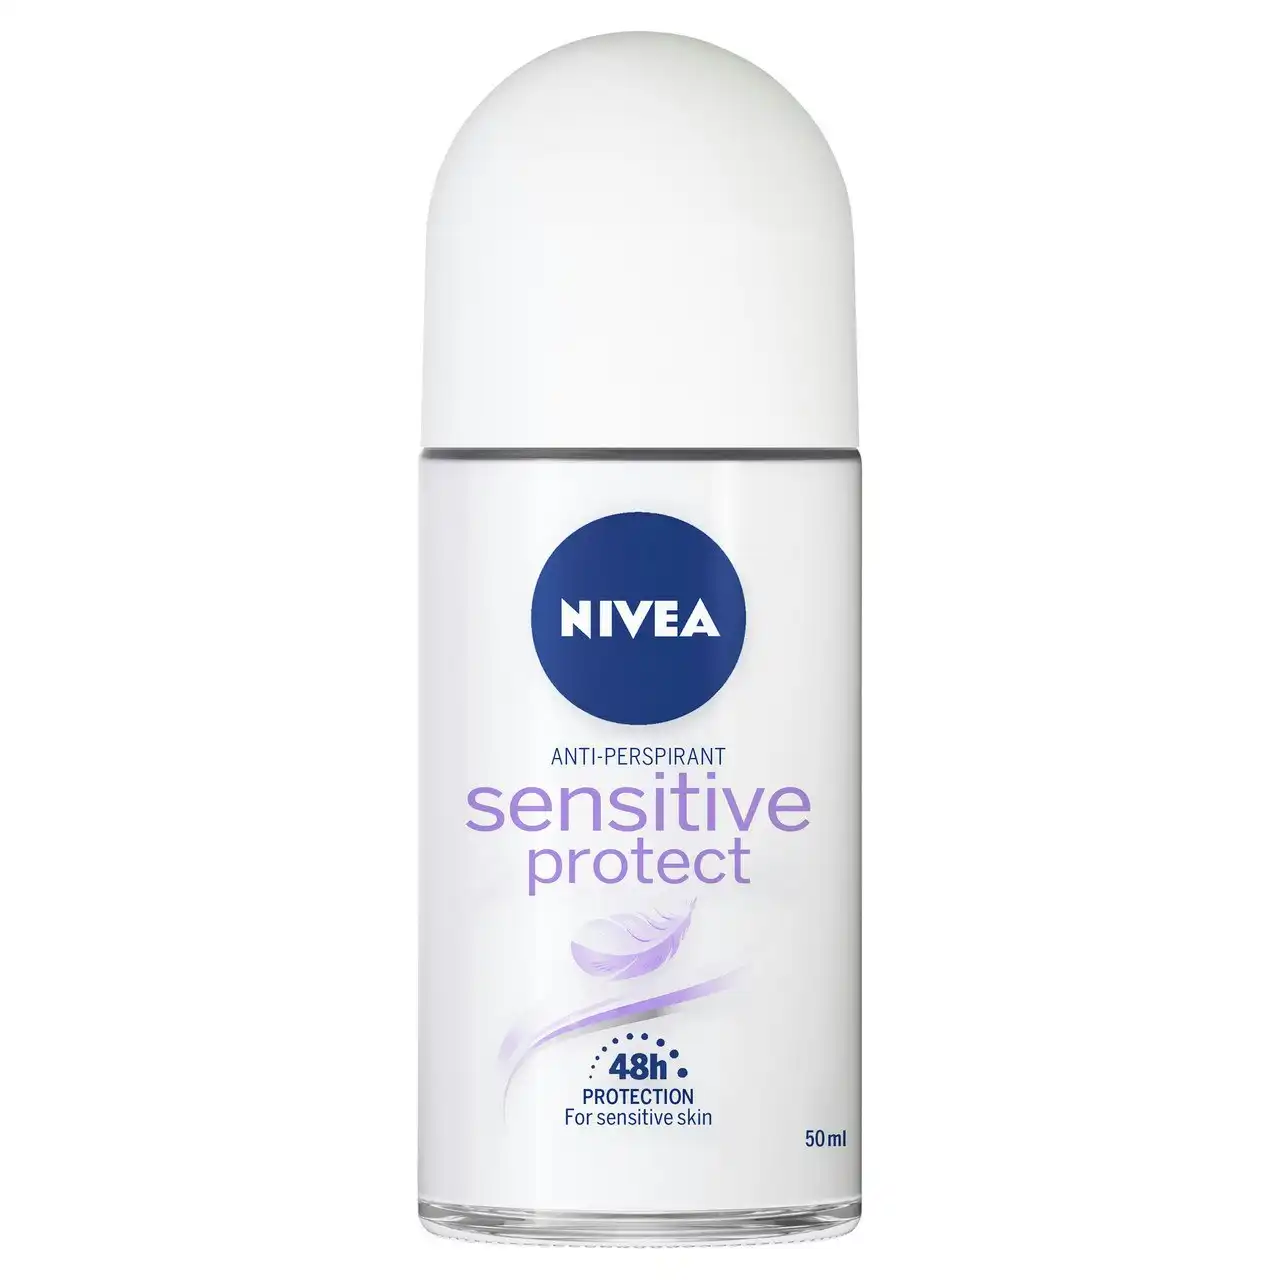 Nivea Sensitive Protect Anti-Perspirant Roll-On Deodorant 50ml